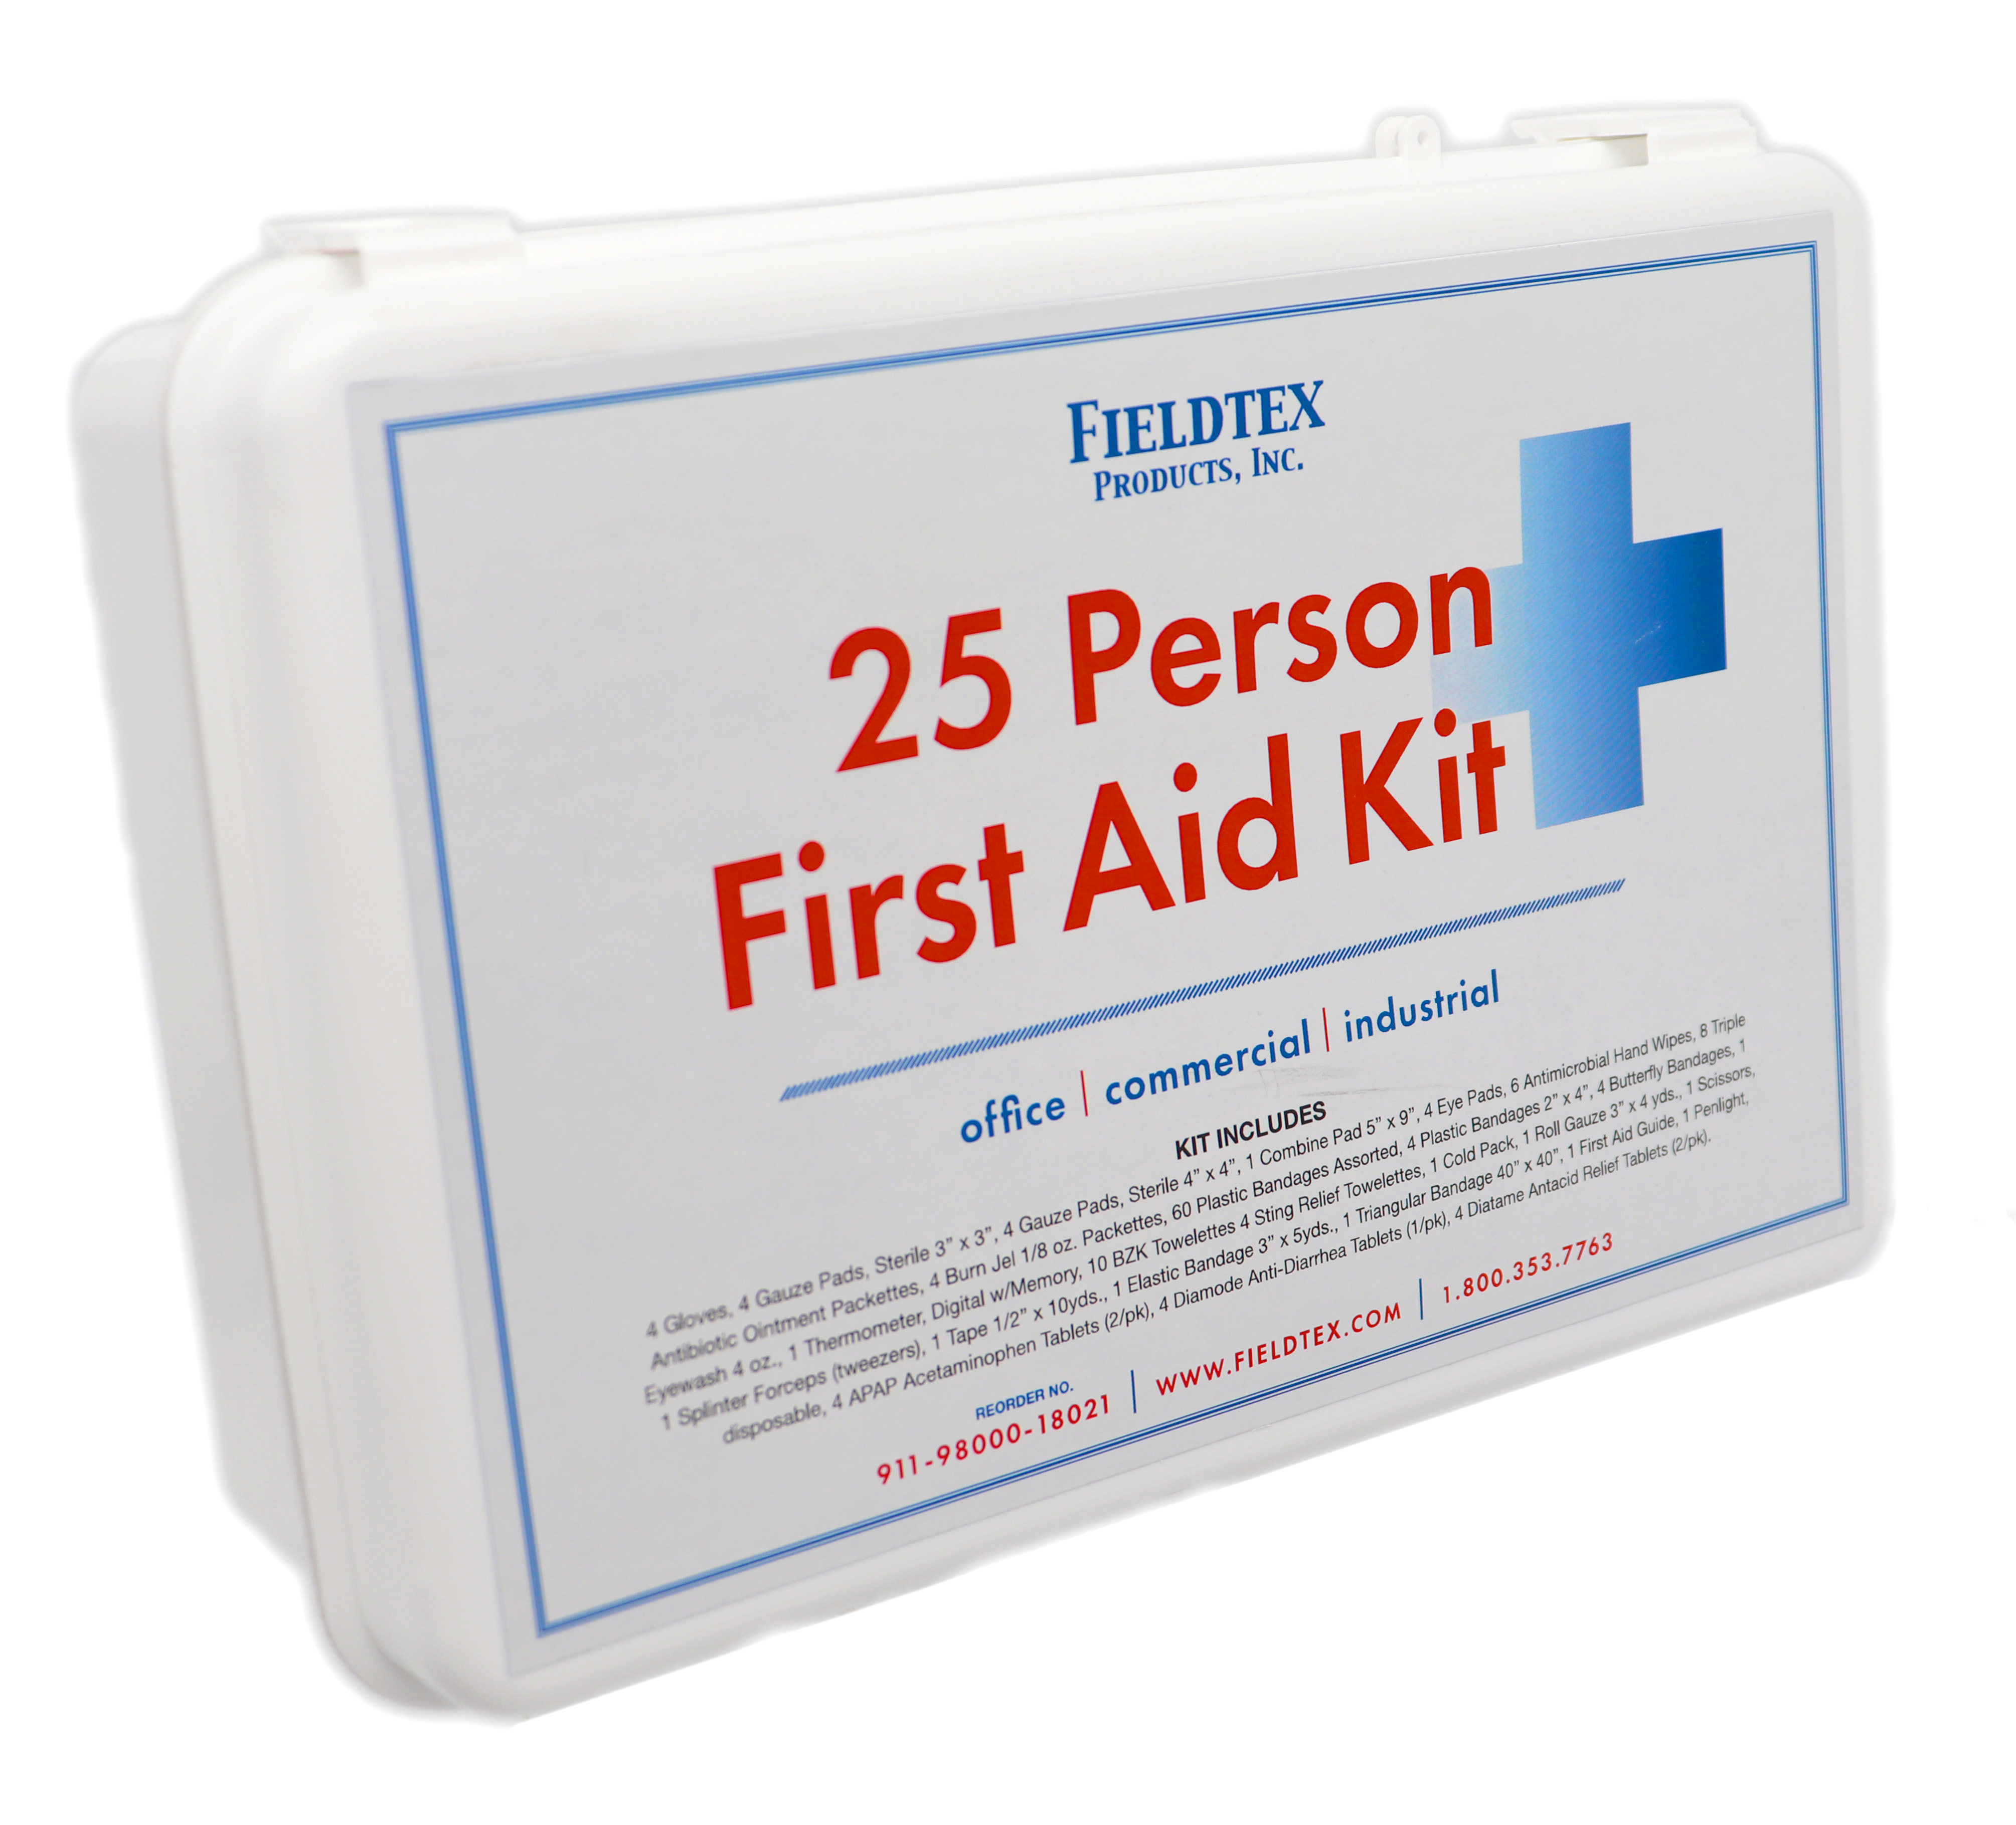 Home First Aid Kits